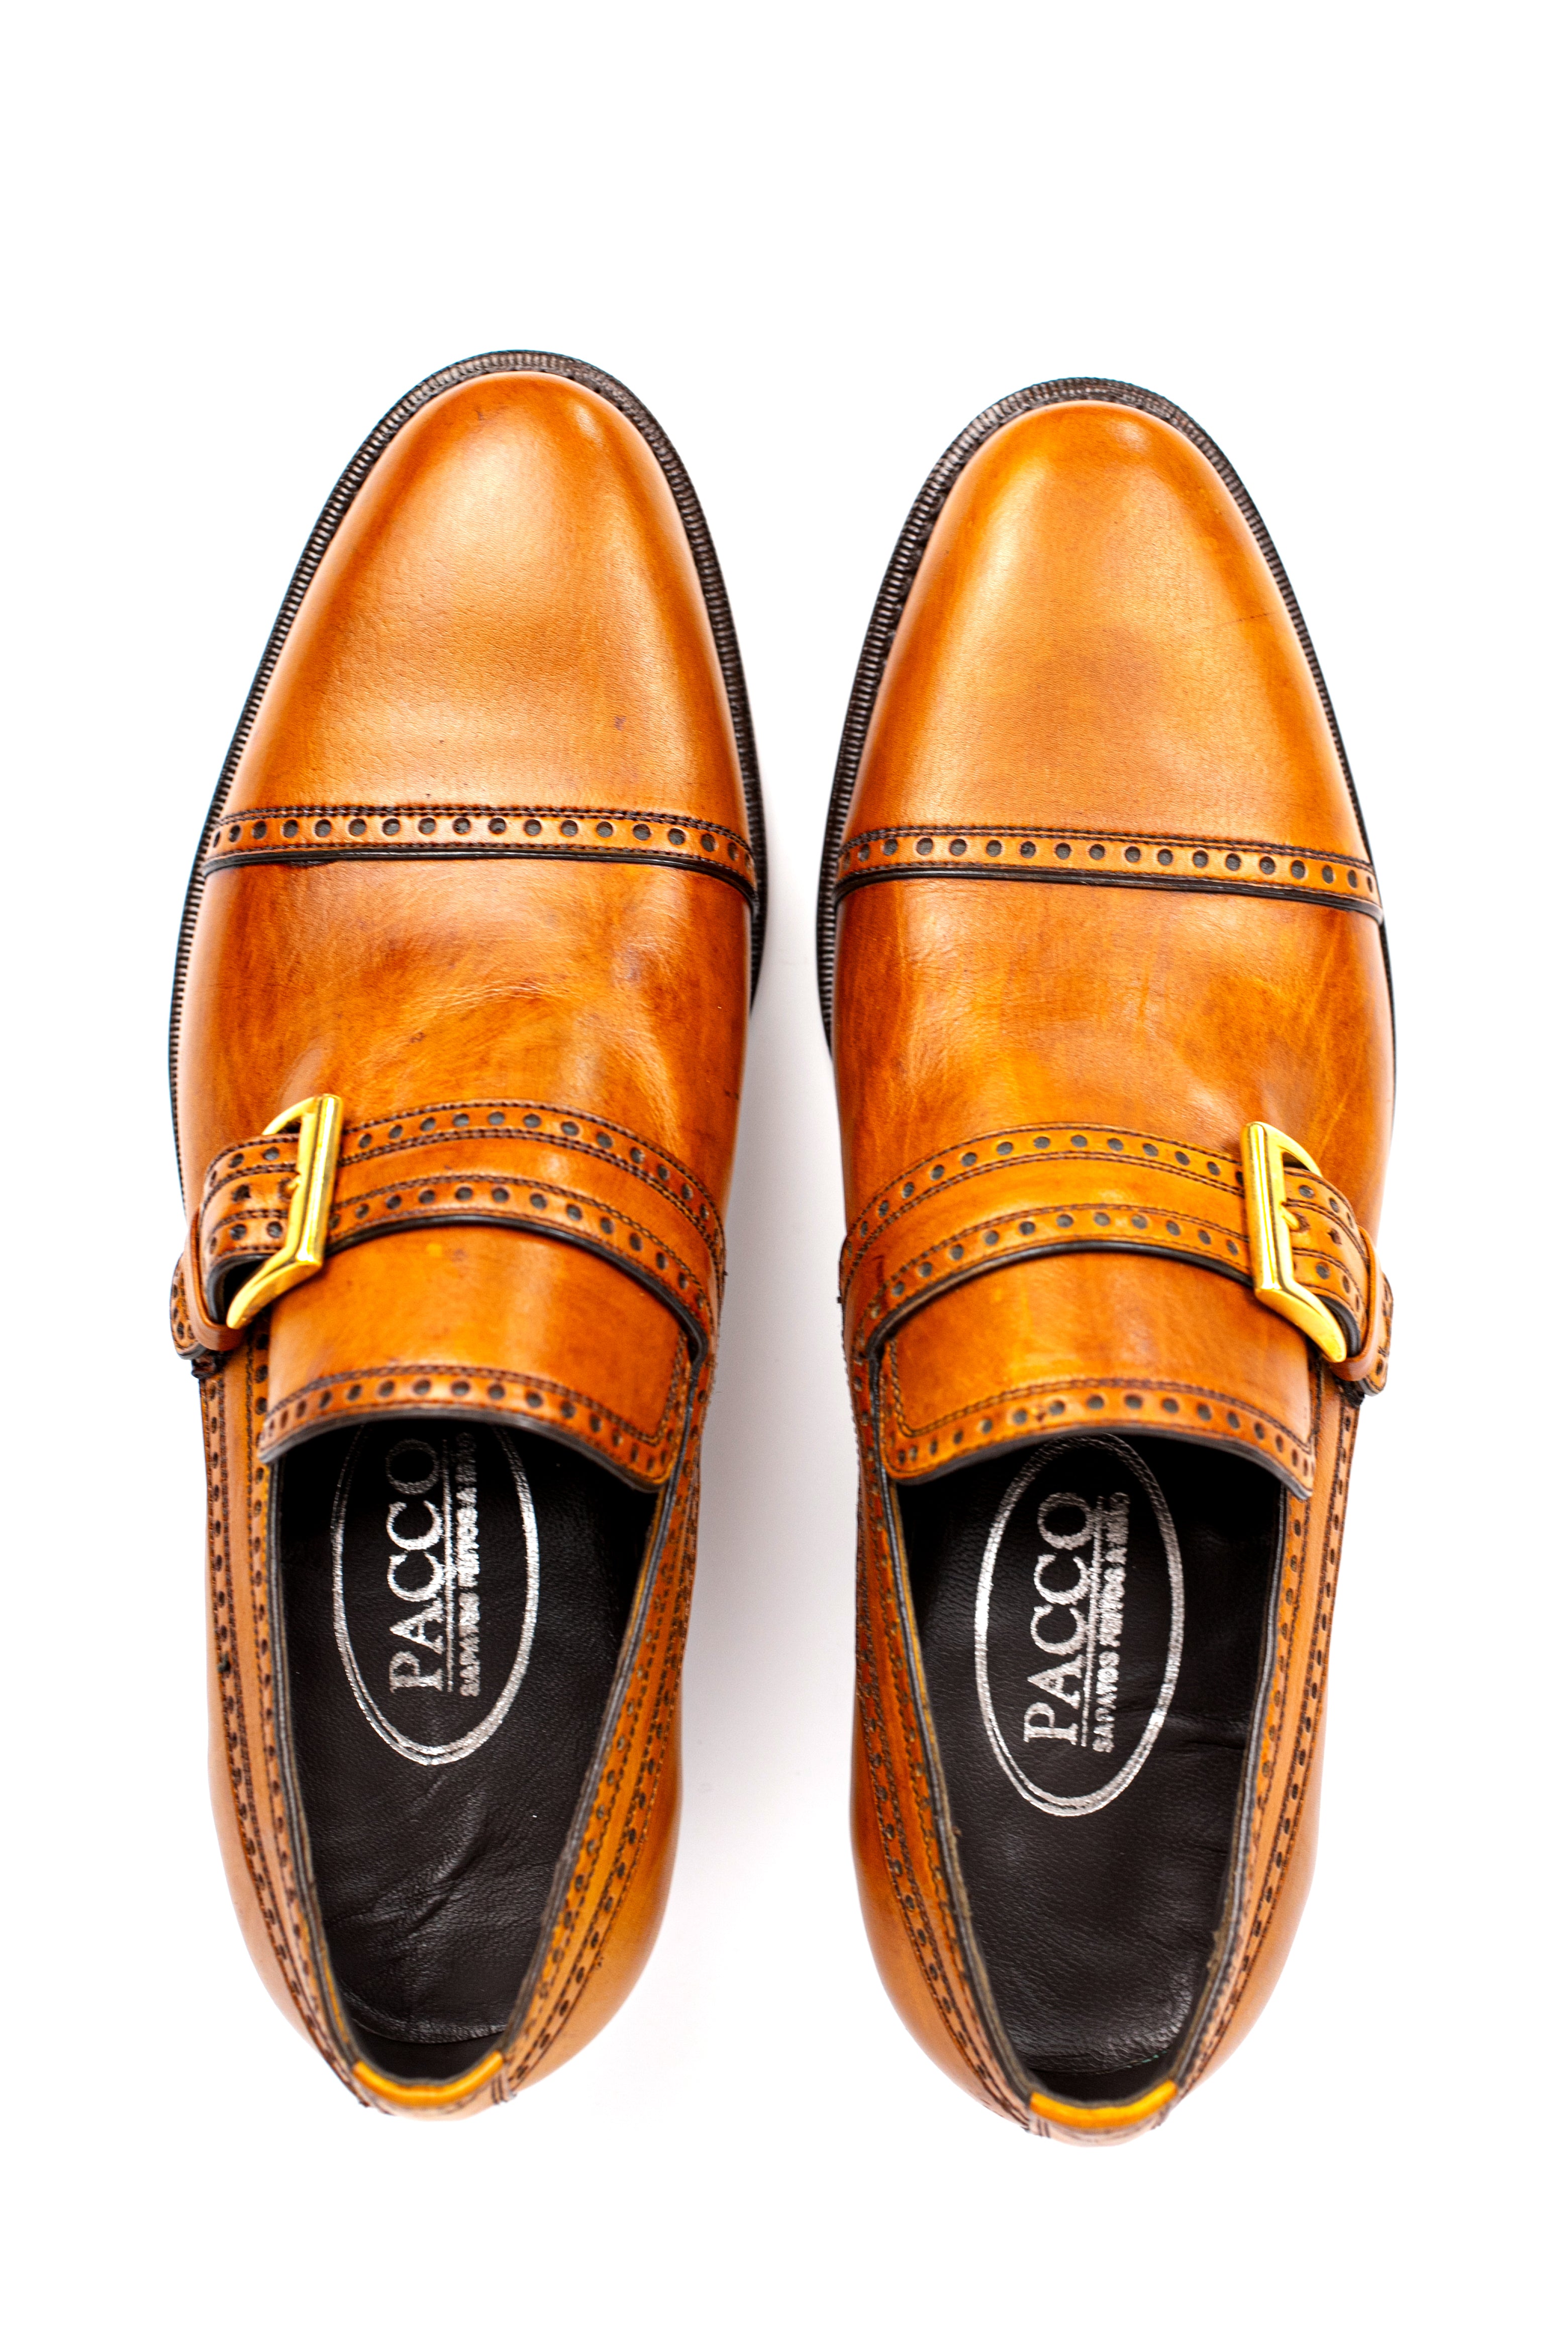 Sapato Monk - Thomas cor artesanal Avelã